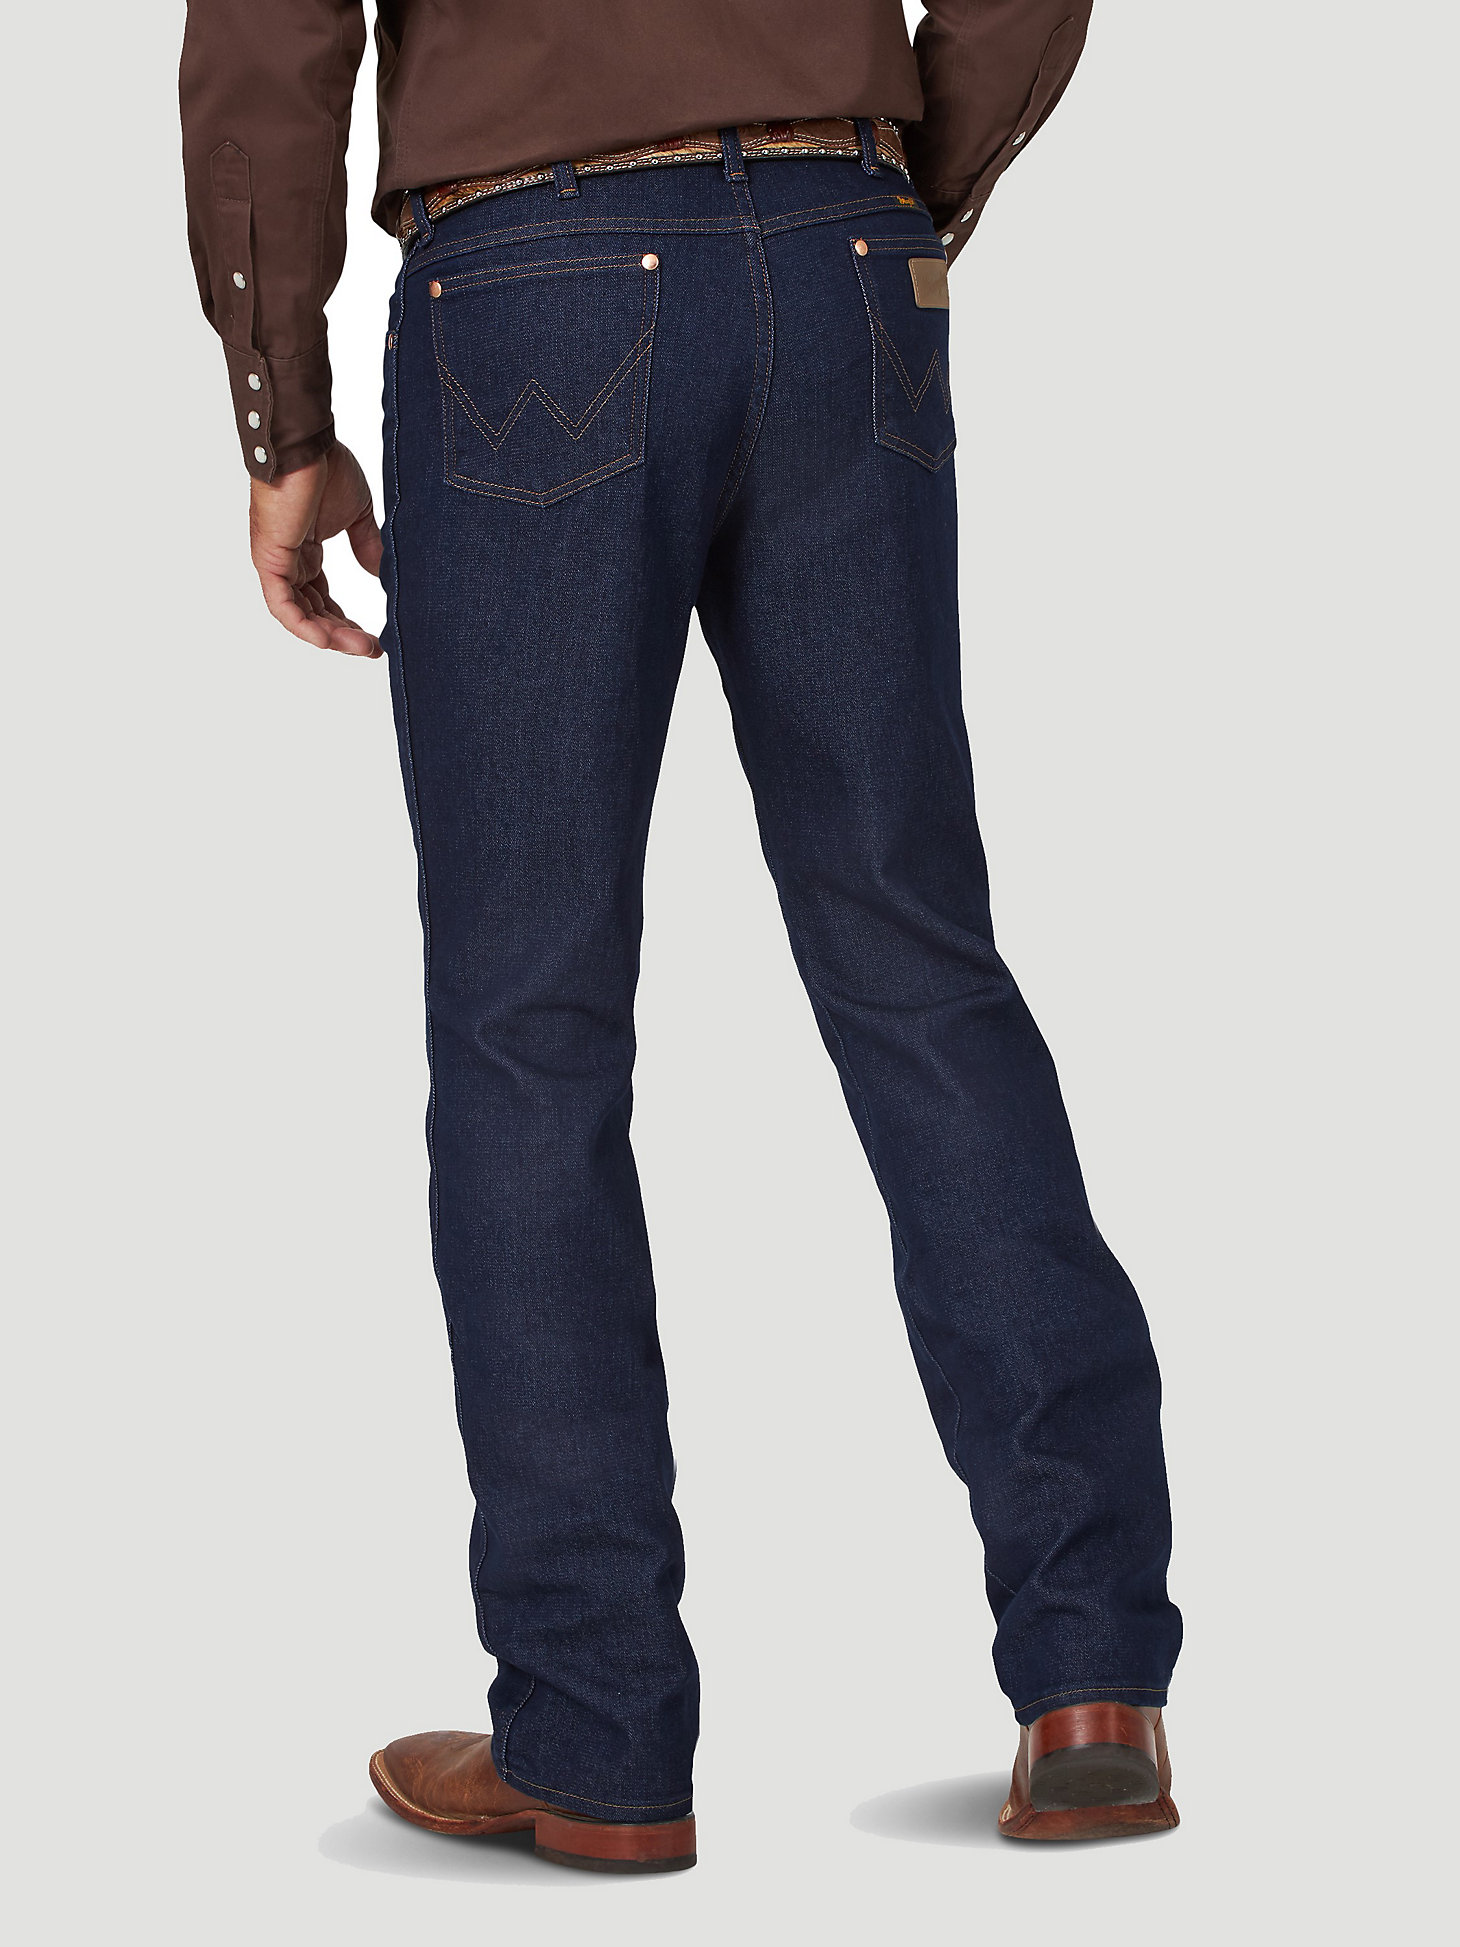 Wrangler® Cowboy Cut® Slim Fit Active Flex Jeans in Prewashed Indigo alternative view 2